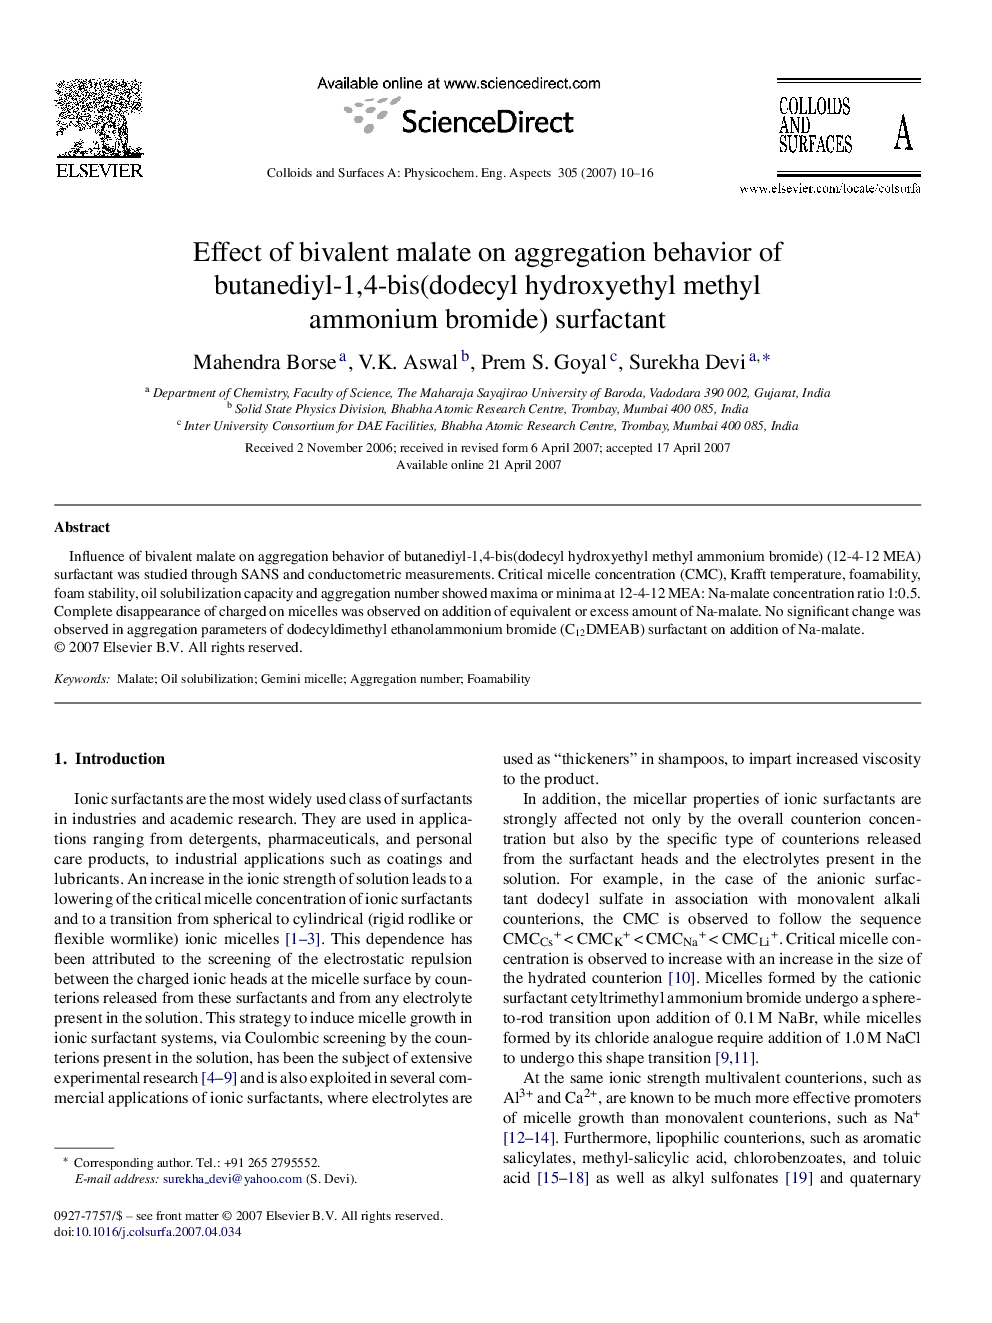 Effect of bivalent malate on aggregation behavior of butanediyl-1,4-bis(dodecyl hydroxyethyl methyl ammonium bromide) surfactant